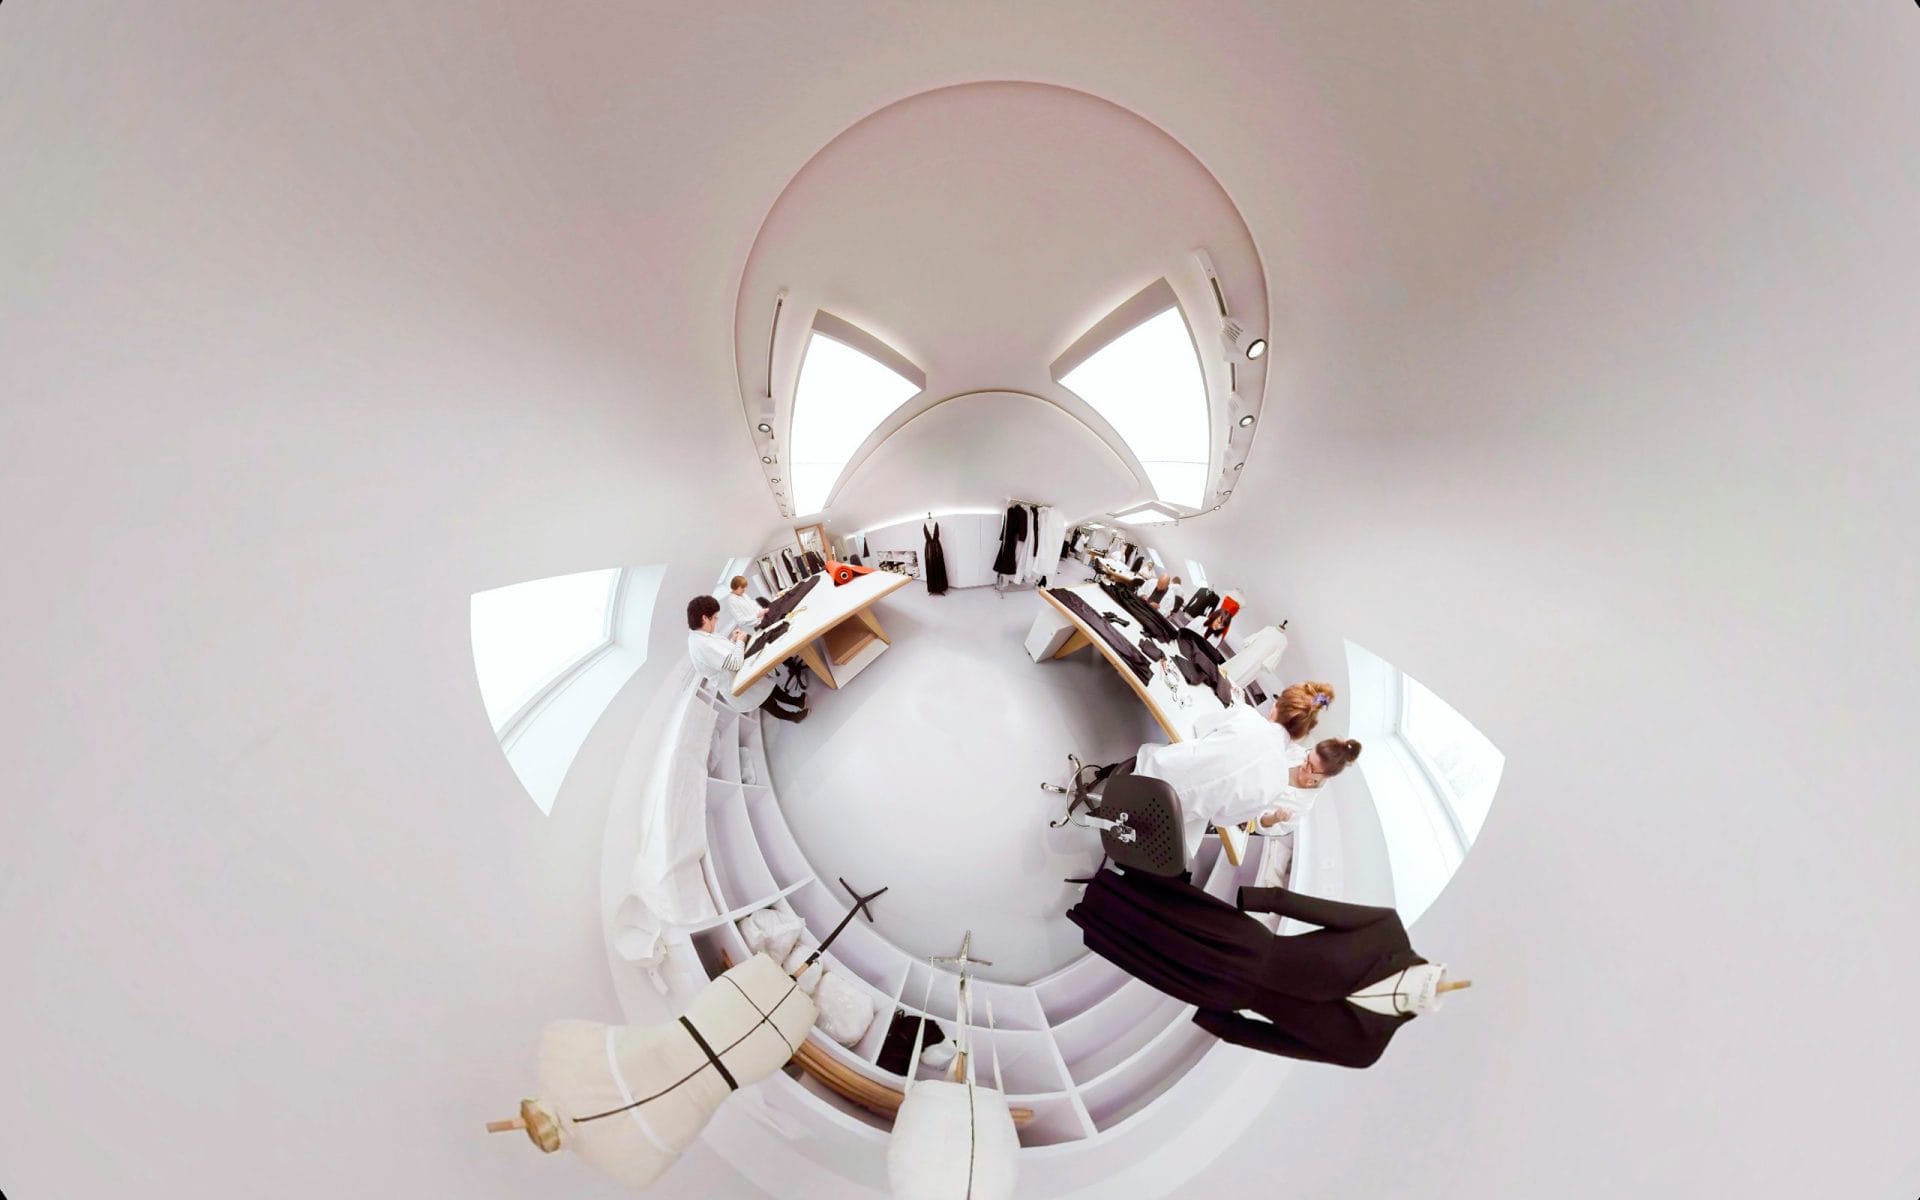 Dior Atelier Avenue Montaigne 360 Virtual Reality Film by Valerio Mezzanotti